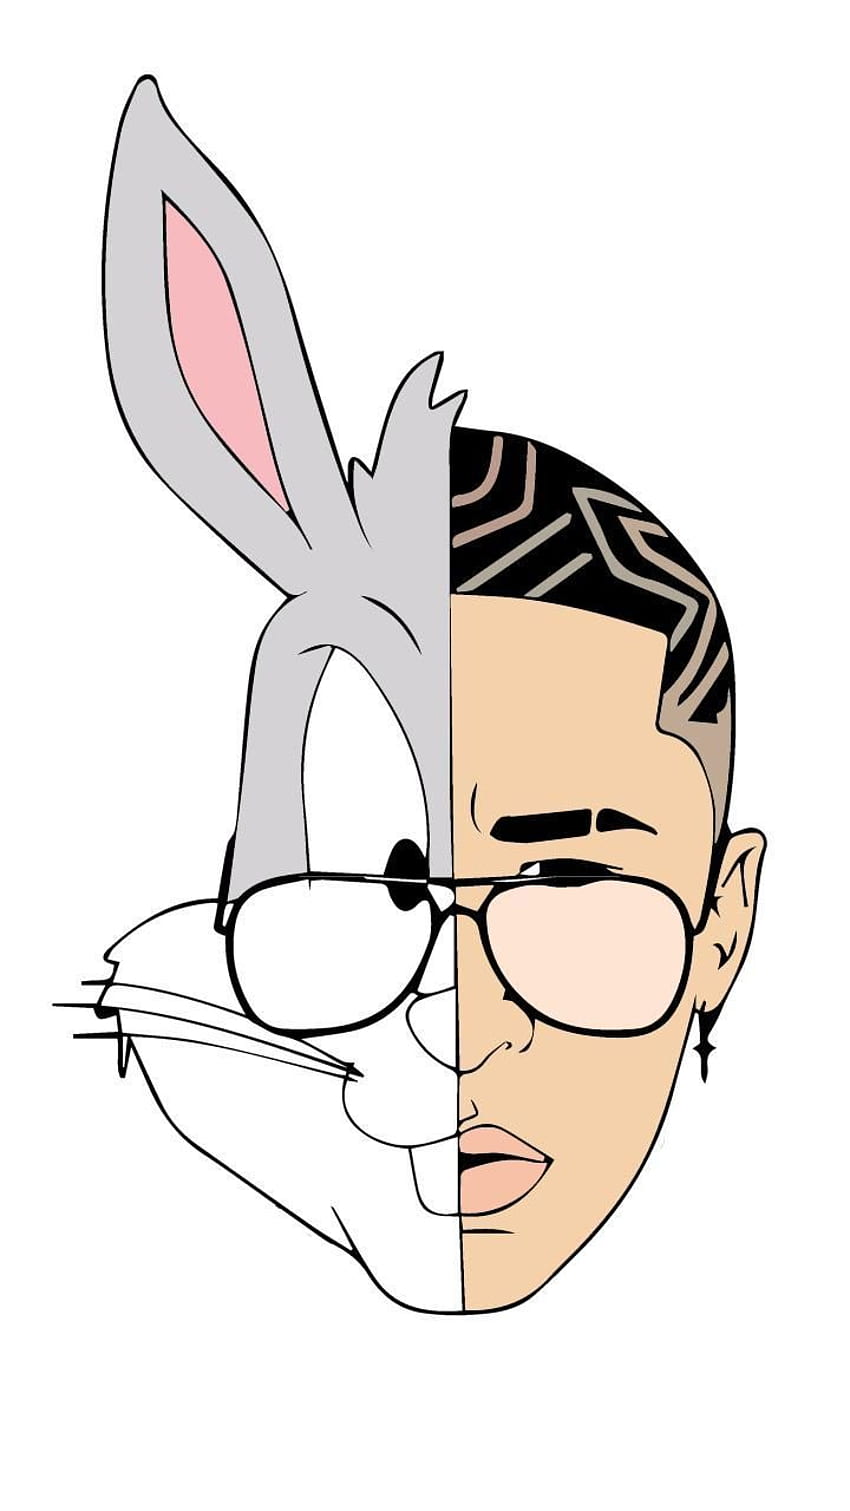 Bad Bunny's Latest Single 